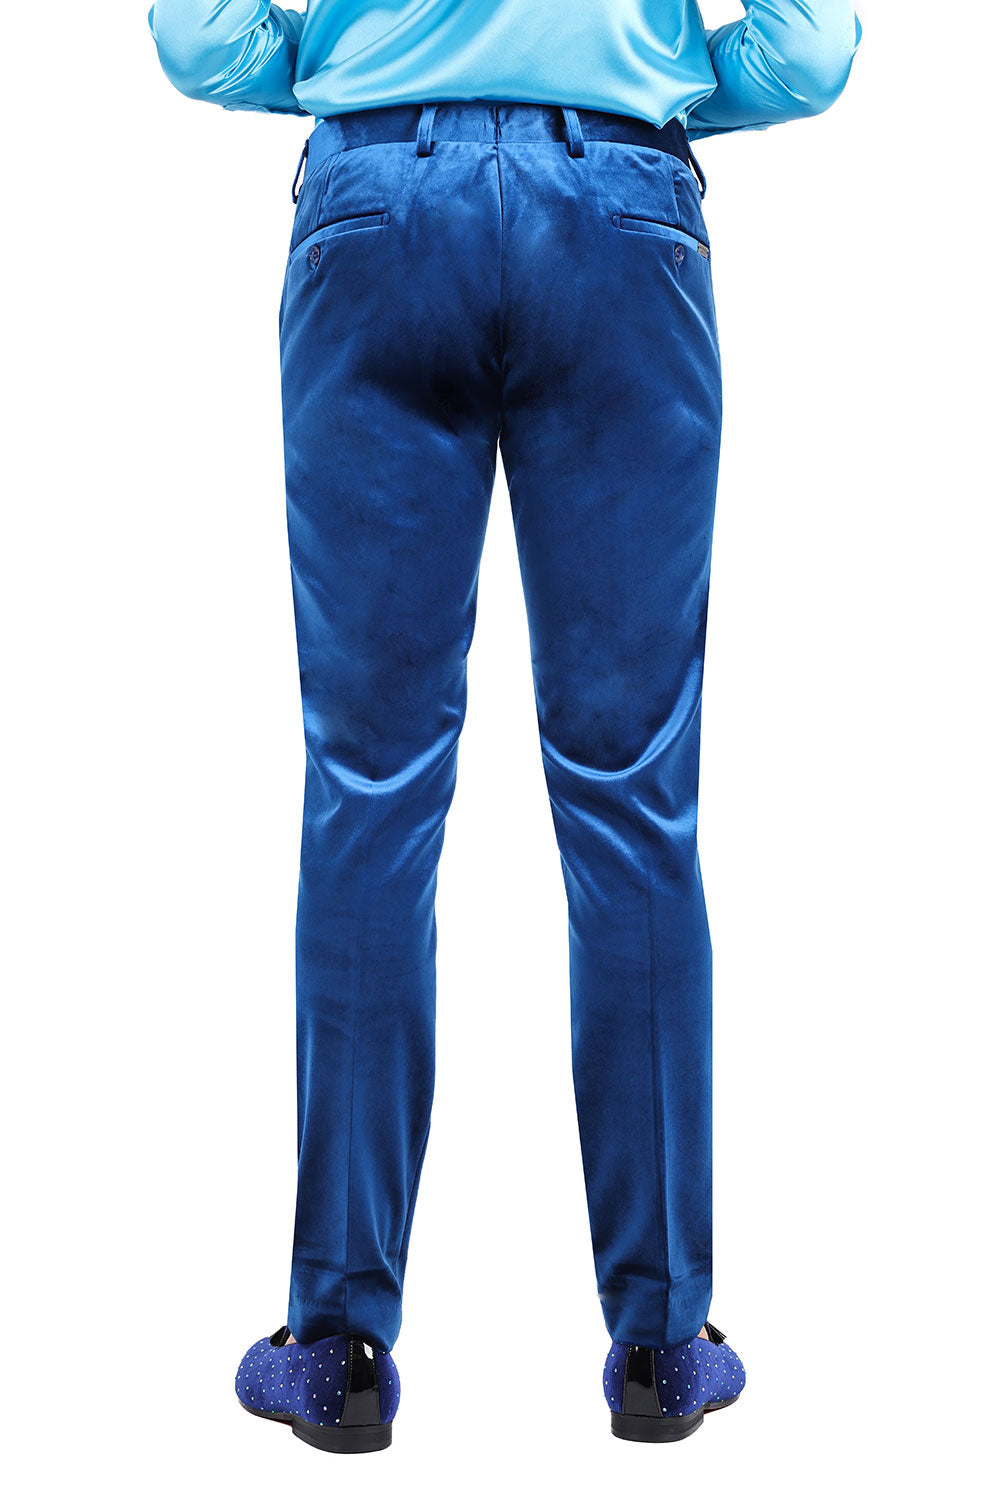 Barabas Men's Velvet Shiny Chino Solid Color Dress Pants 3CP06 Blue